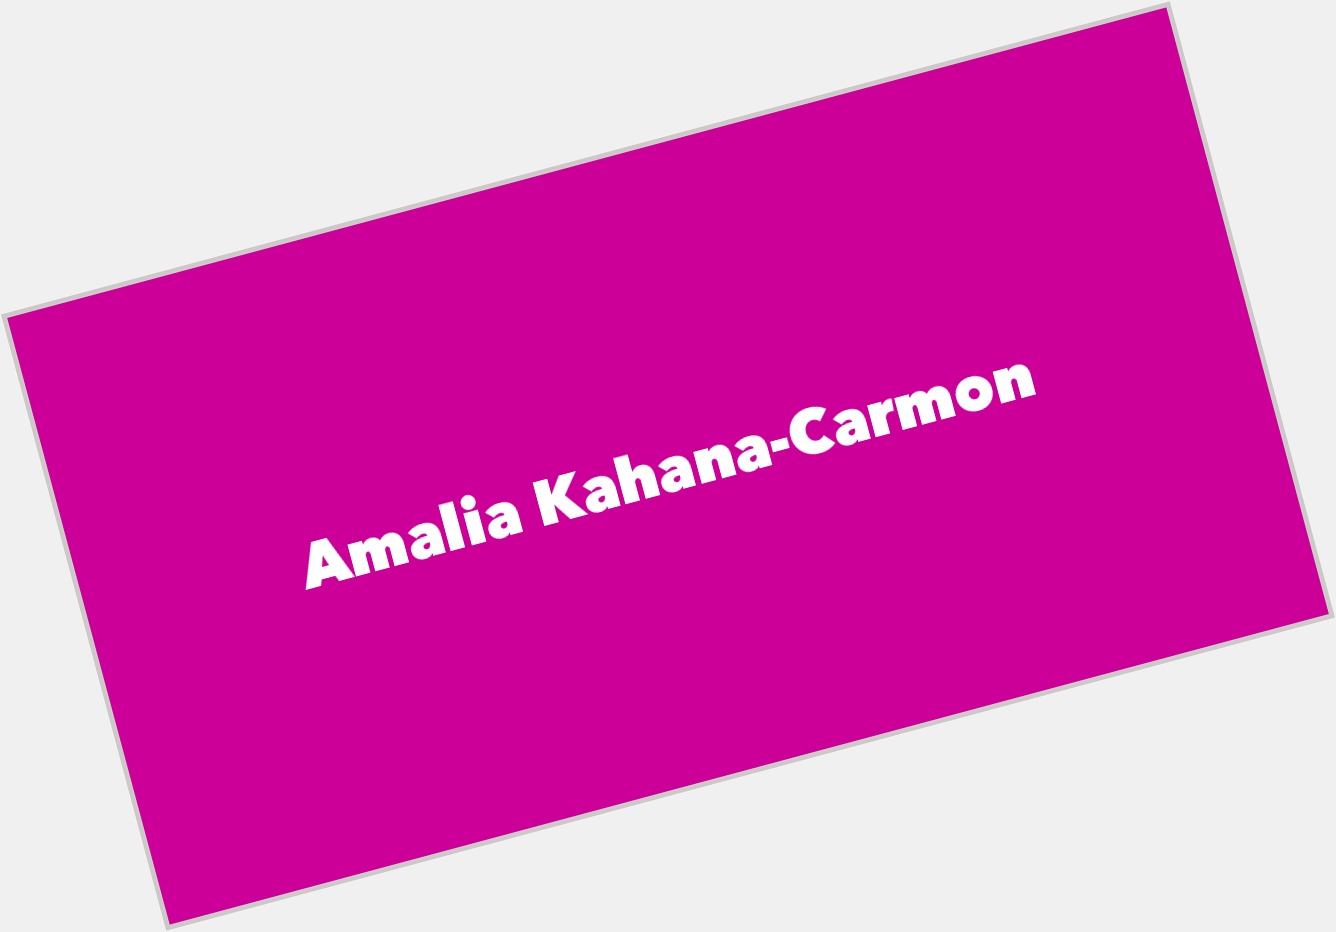 Amalia Kahana Carmon shirtless bikini